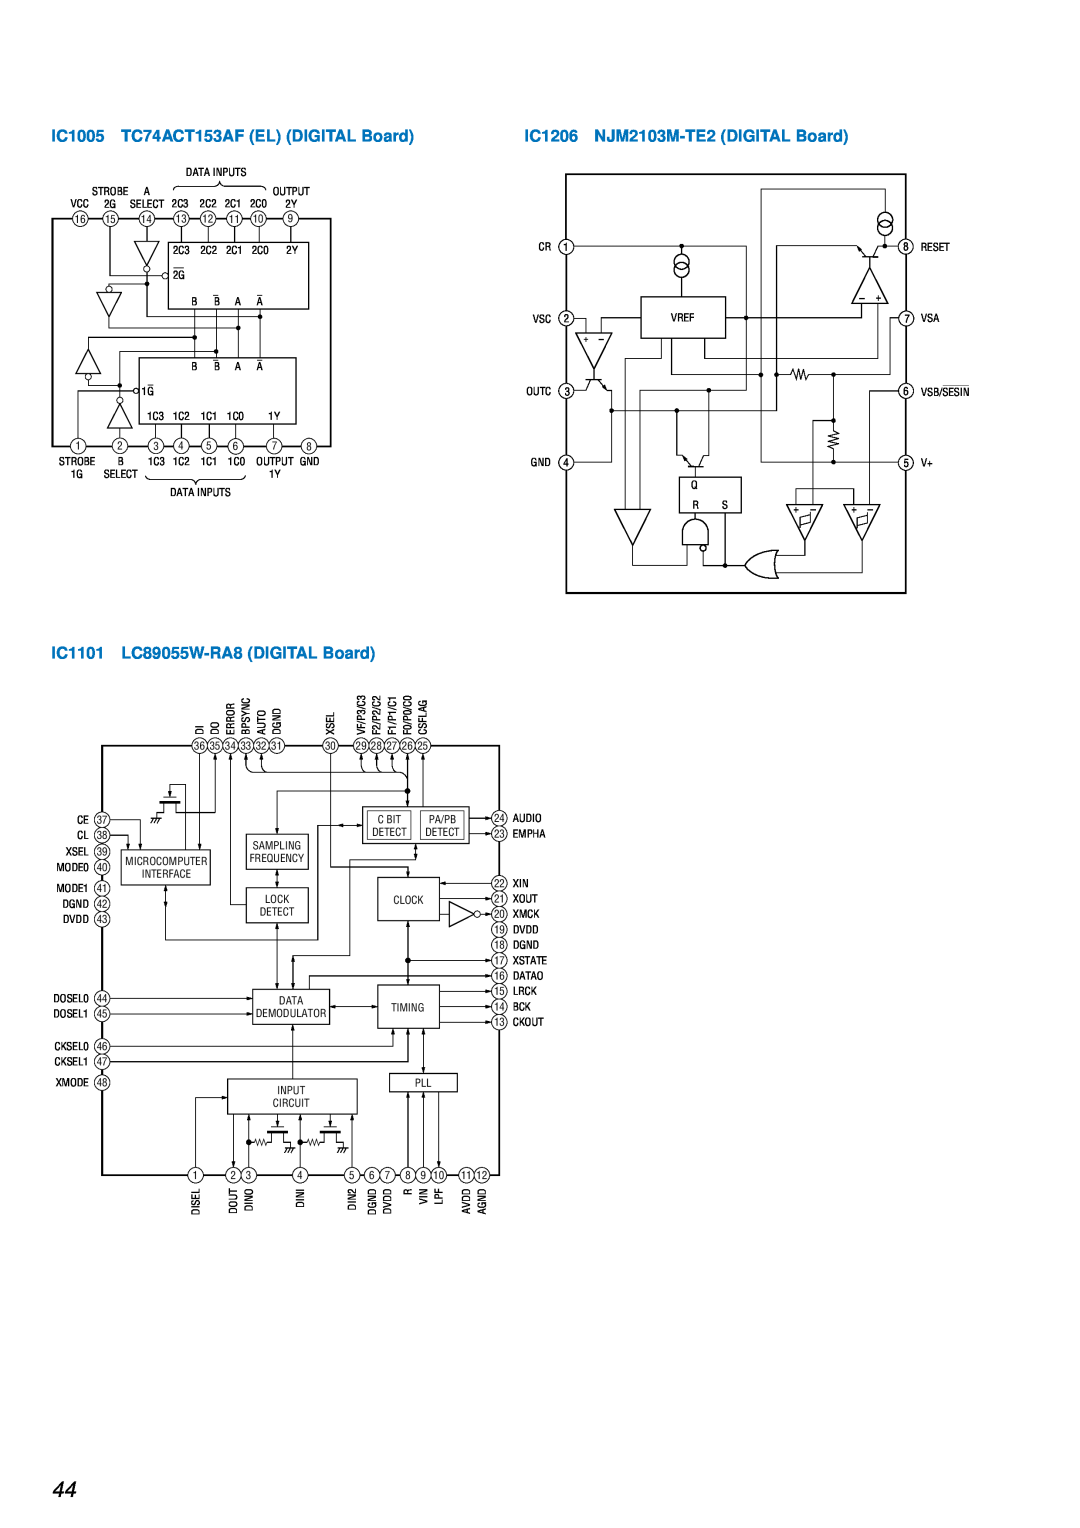 Sony STR-DE845 IC1005 TC74ACT153AF EL DIGITAL Board, IC1206, NJM2103M-TE2DIGITAL Board, IC1101, LC89055W-RA8DIGITAL Board 